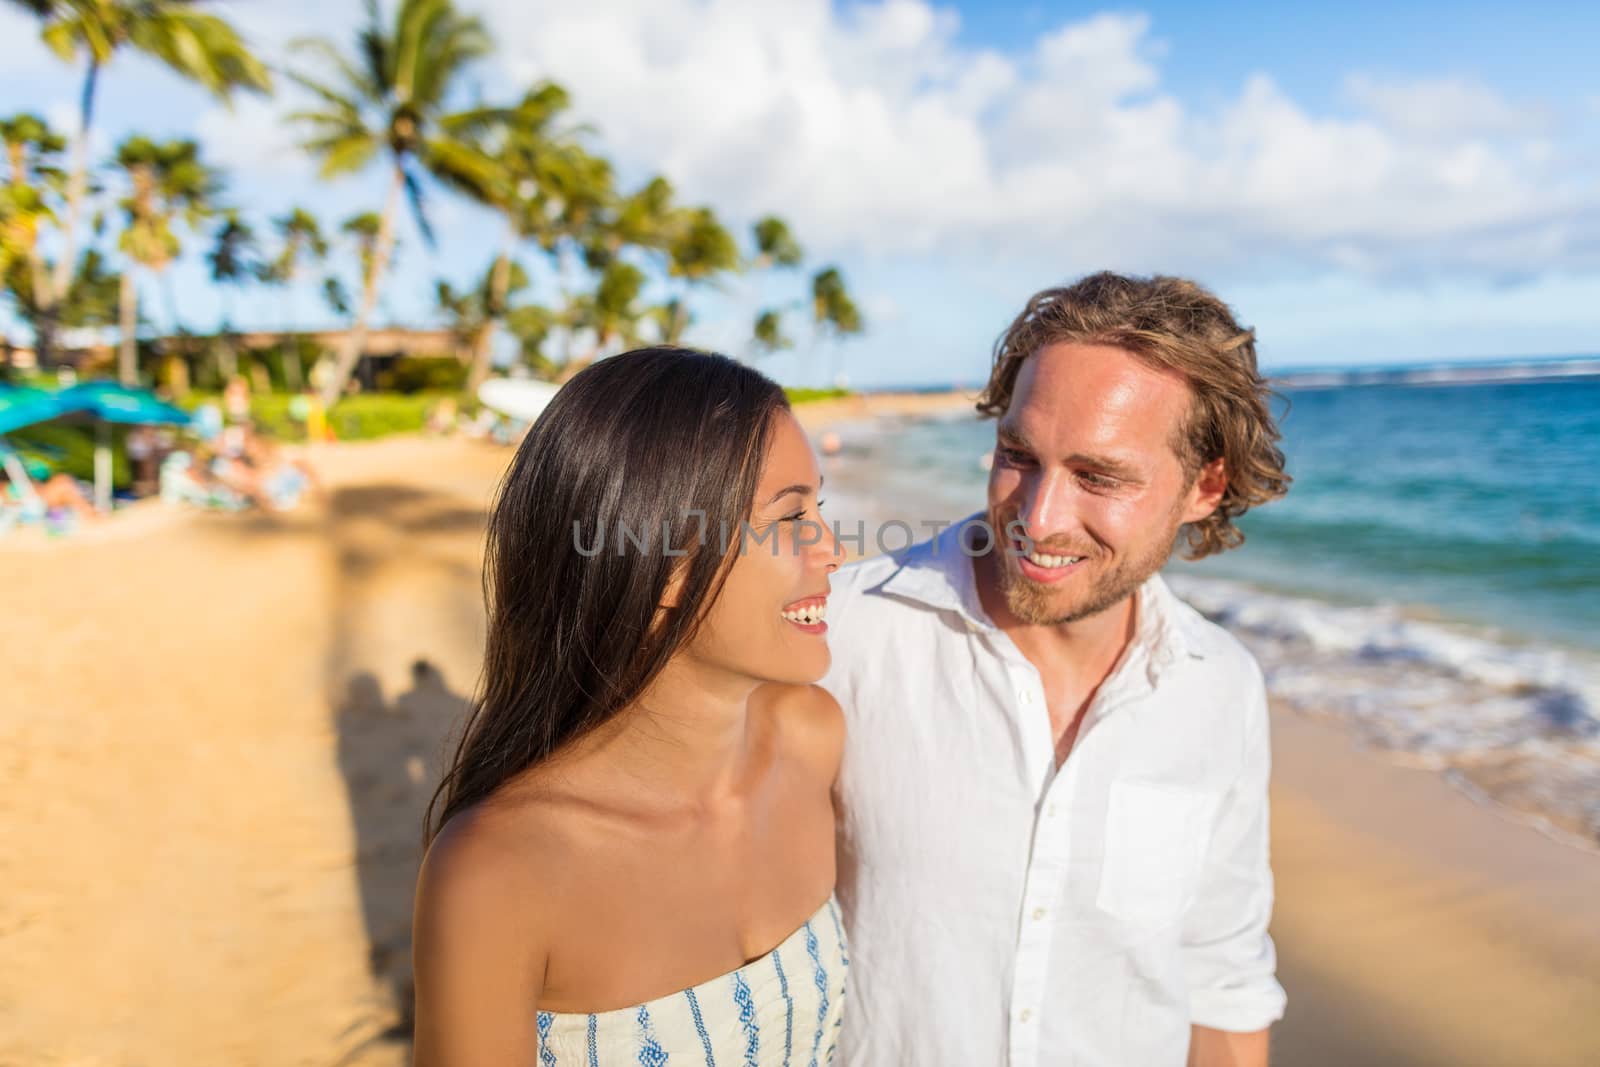 Hawaii travel beach couple laughing together happy on honeymoon vacation. People enjoying hawaiian sunset holidays by Maridav